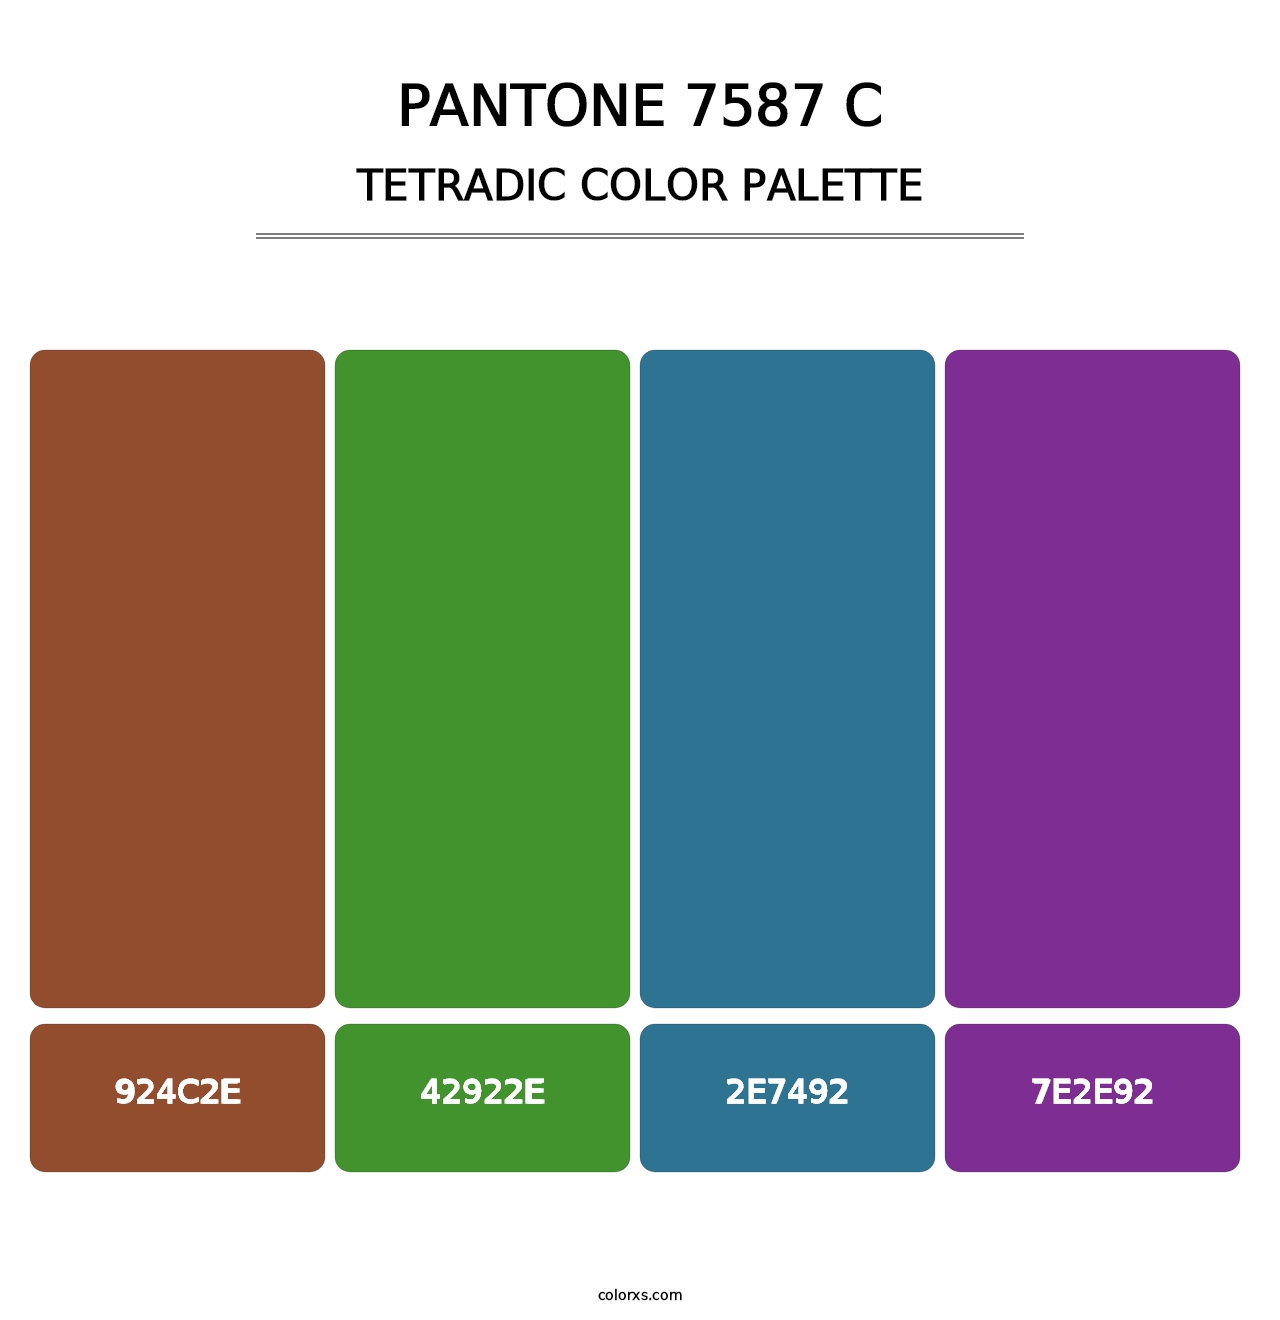 PANTONE 7587 C - Tetradic Color Palette